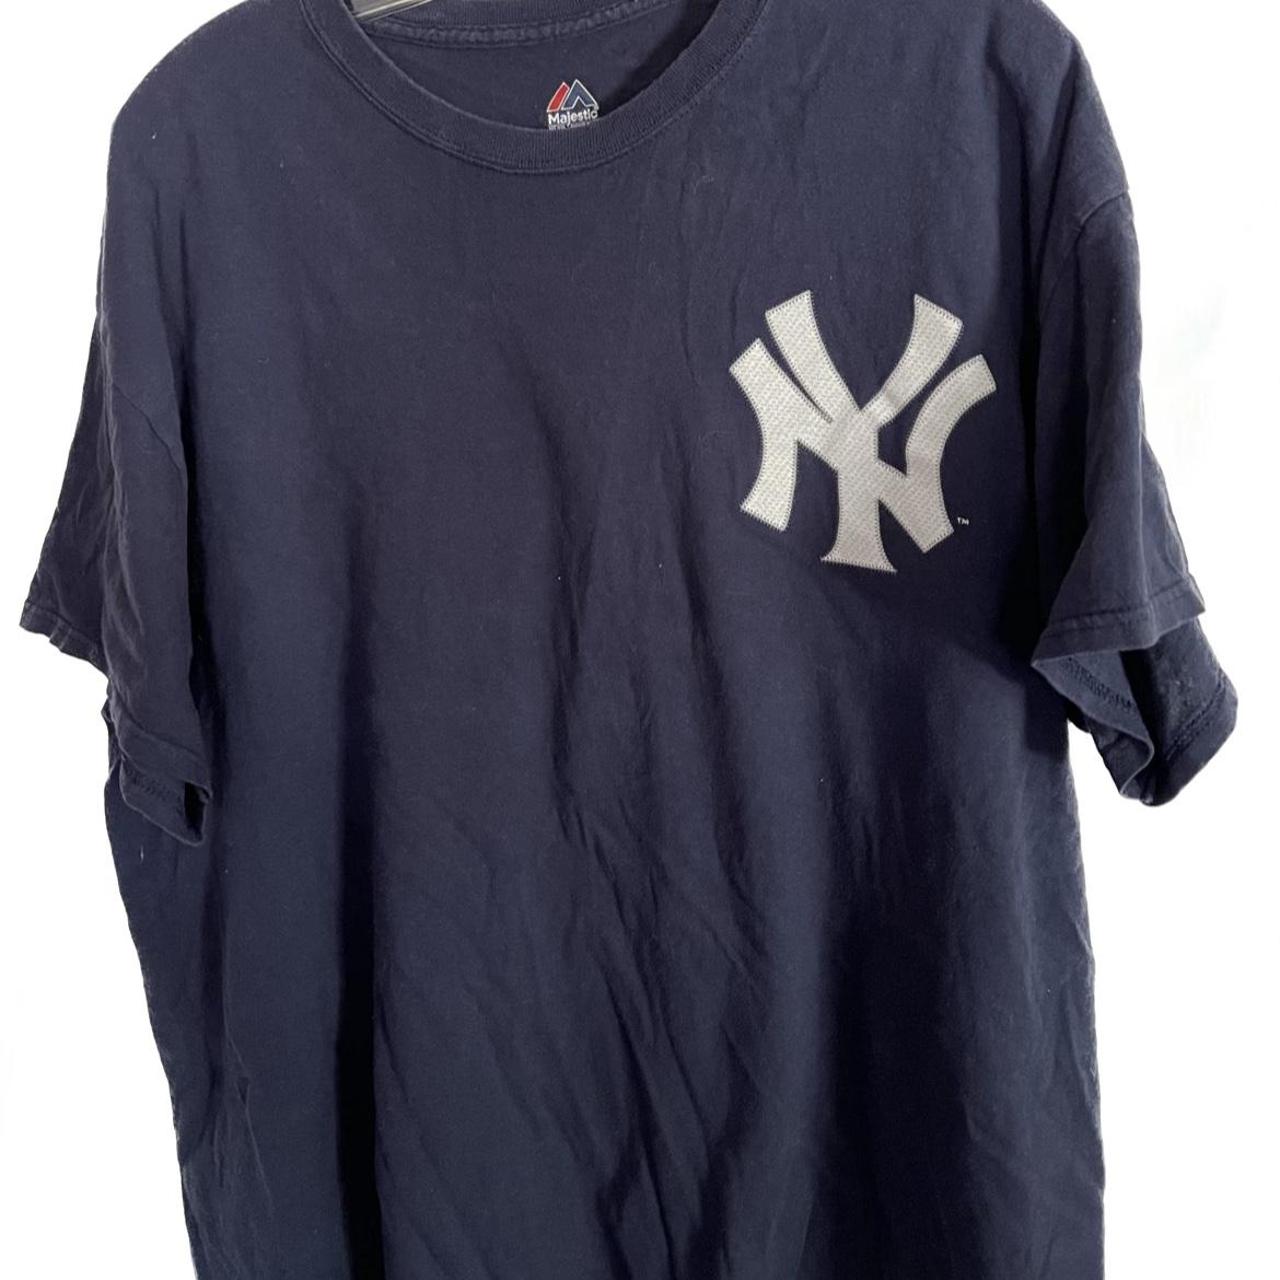 Miguel Andujar Yankees shirt jersey In great - Depop